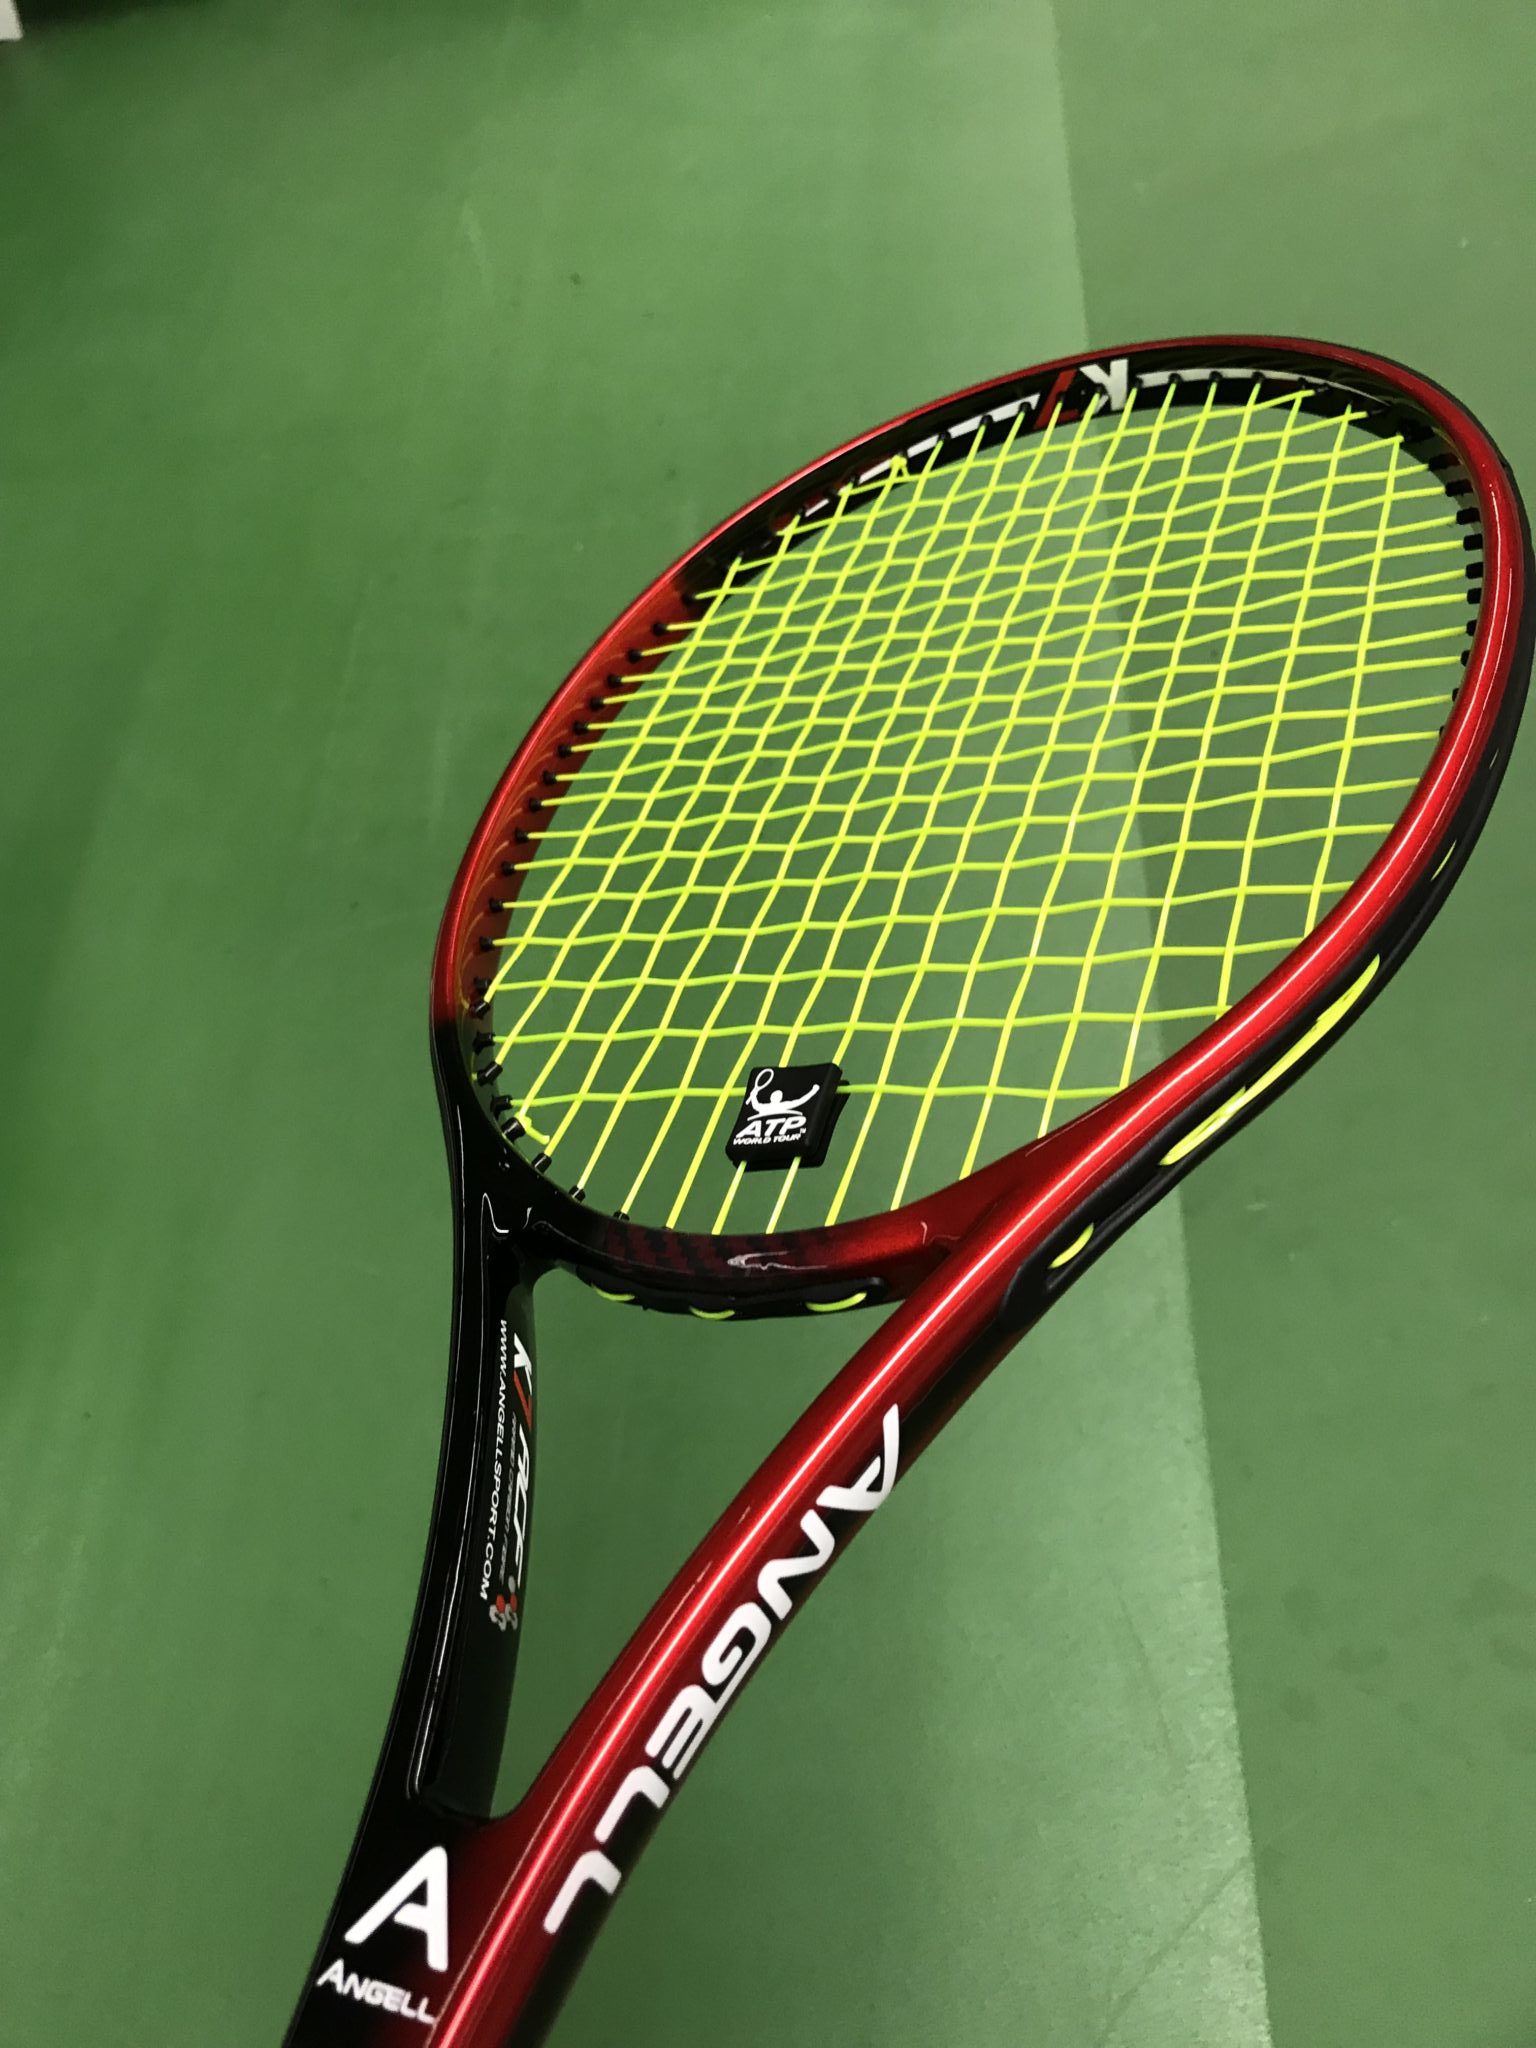 Red Tennis Racket